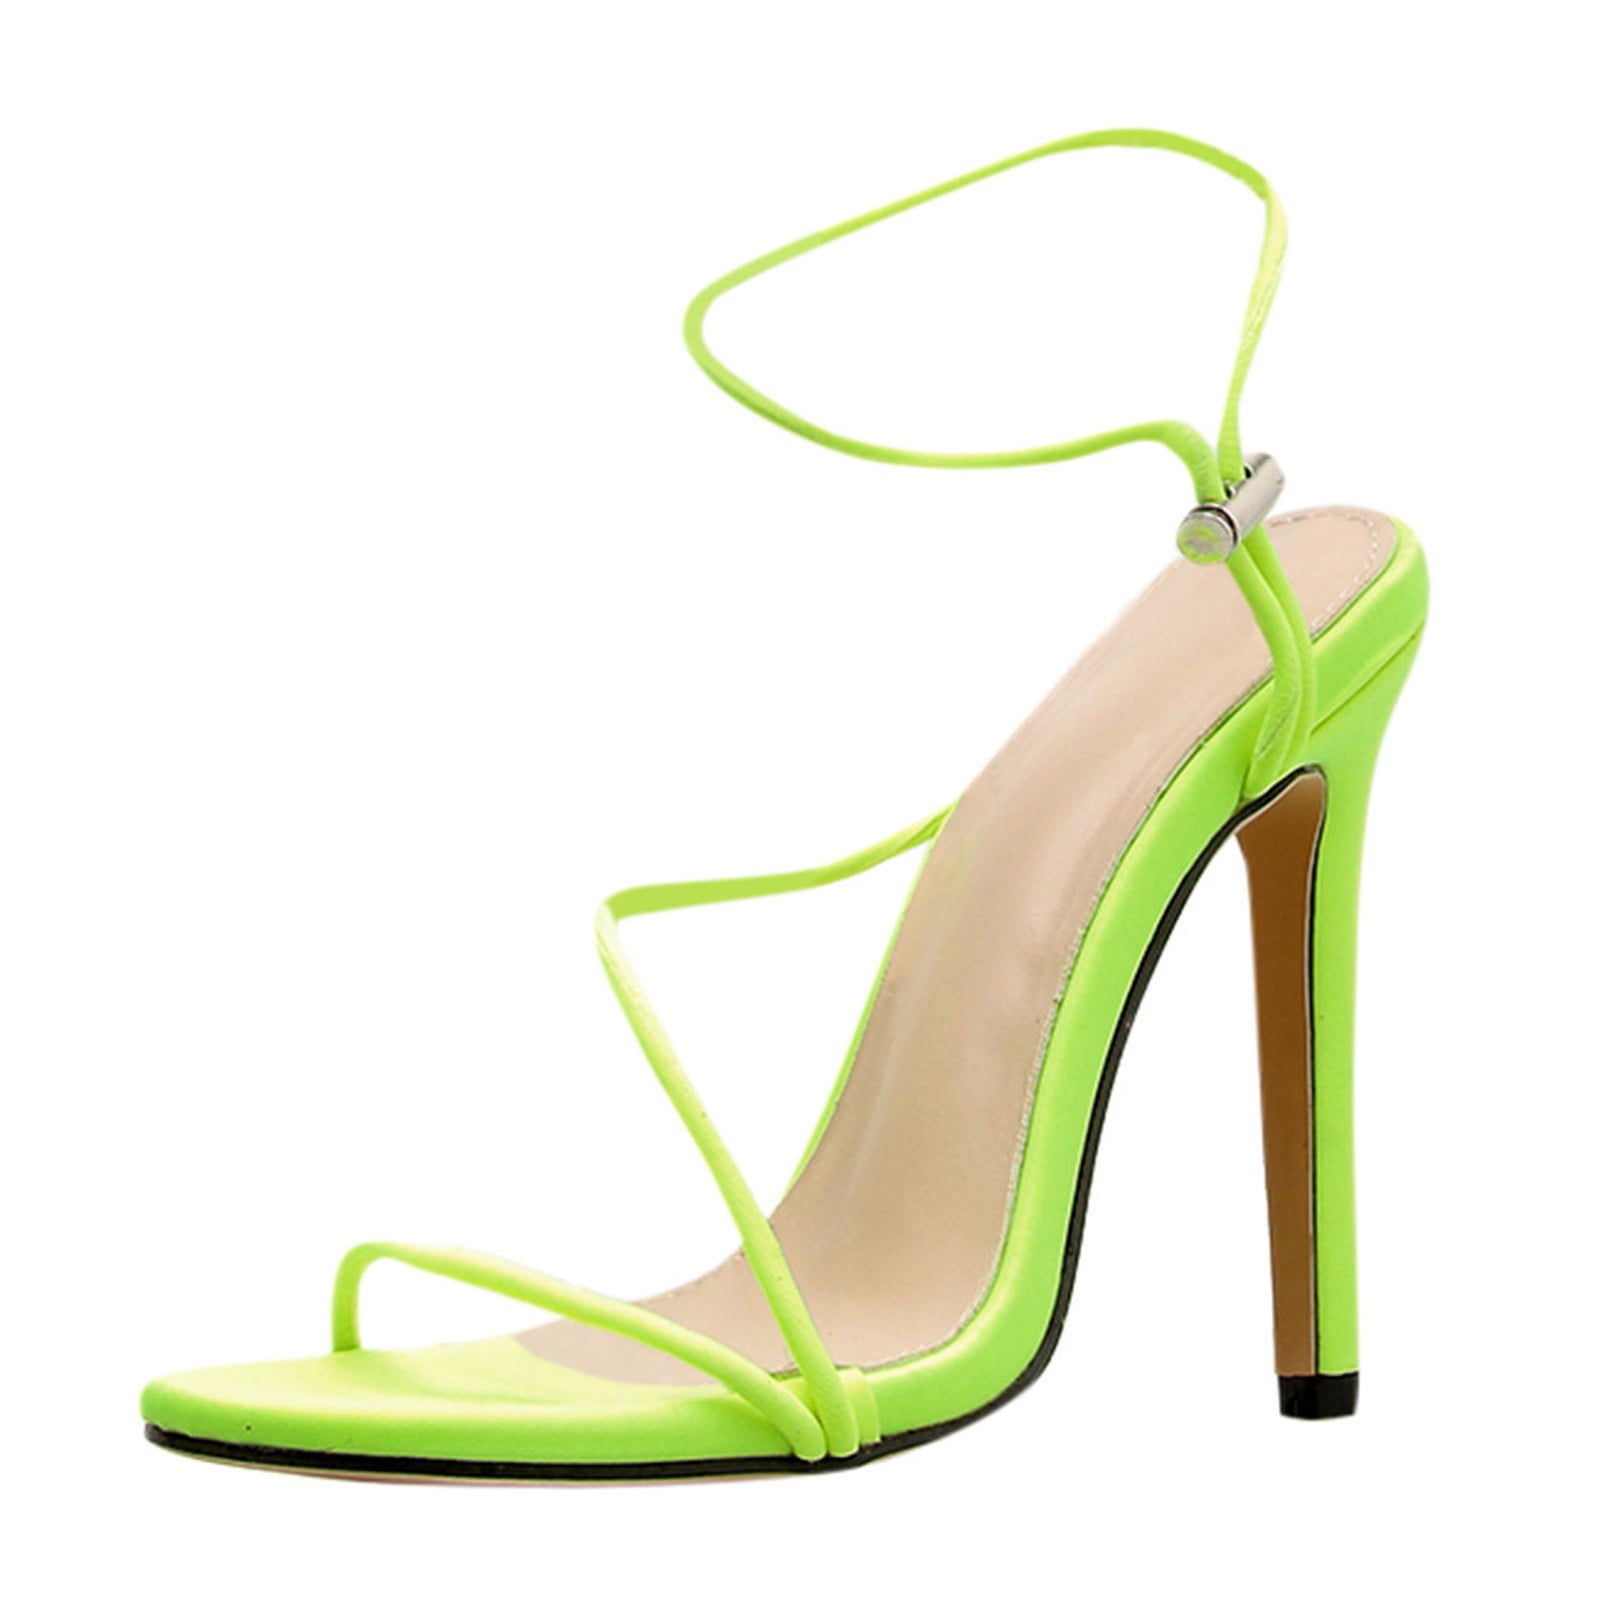 Women's professional high heels Classic Pointed Toe Dress Pump - Womens  High Heel Stiletto Formal Shoes - Walmart.com